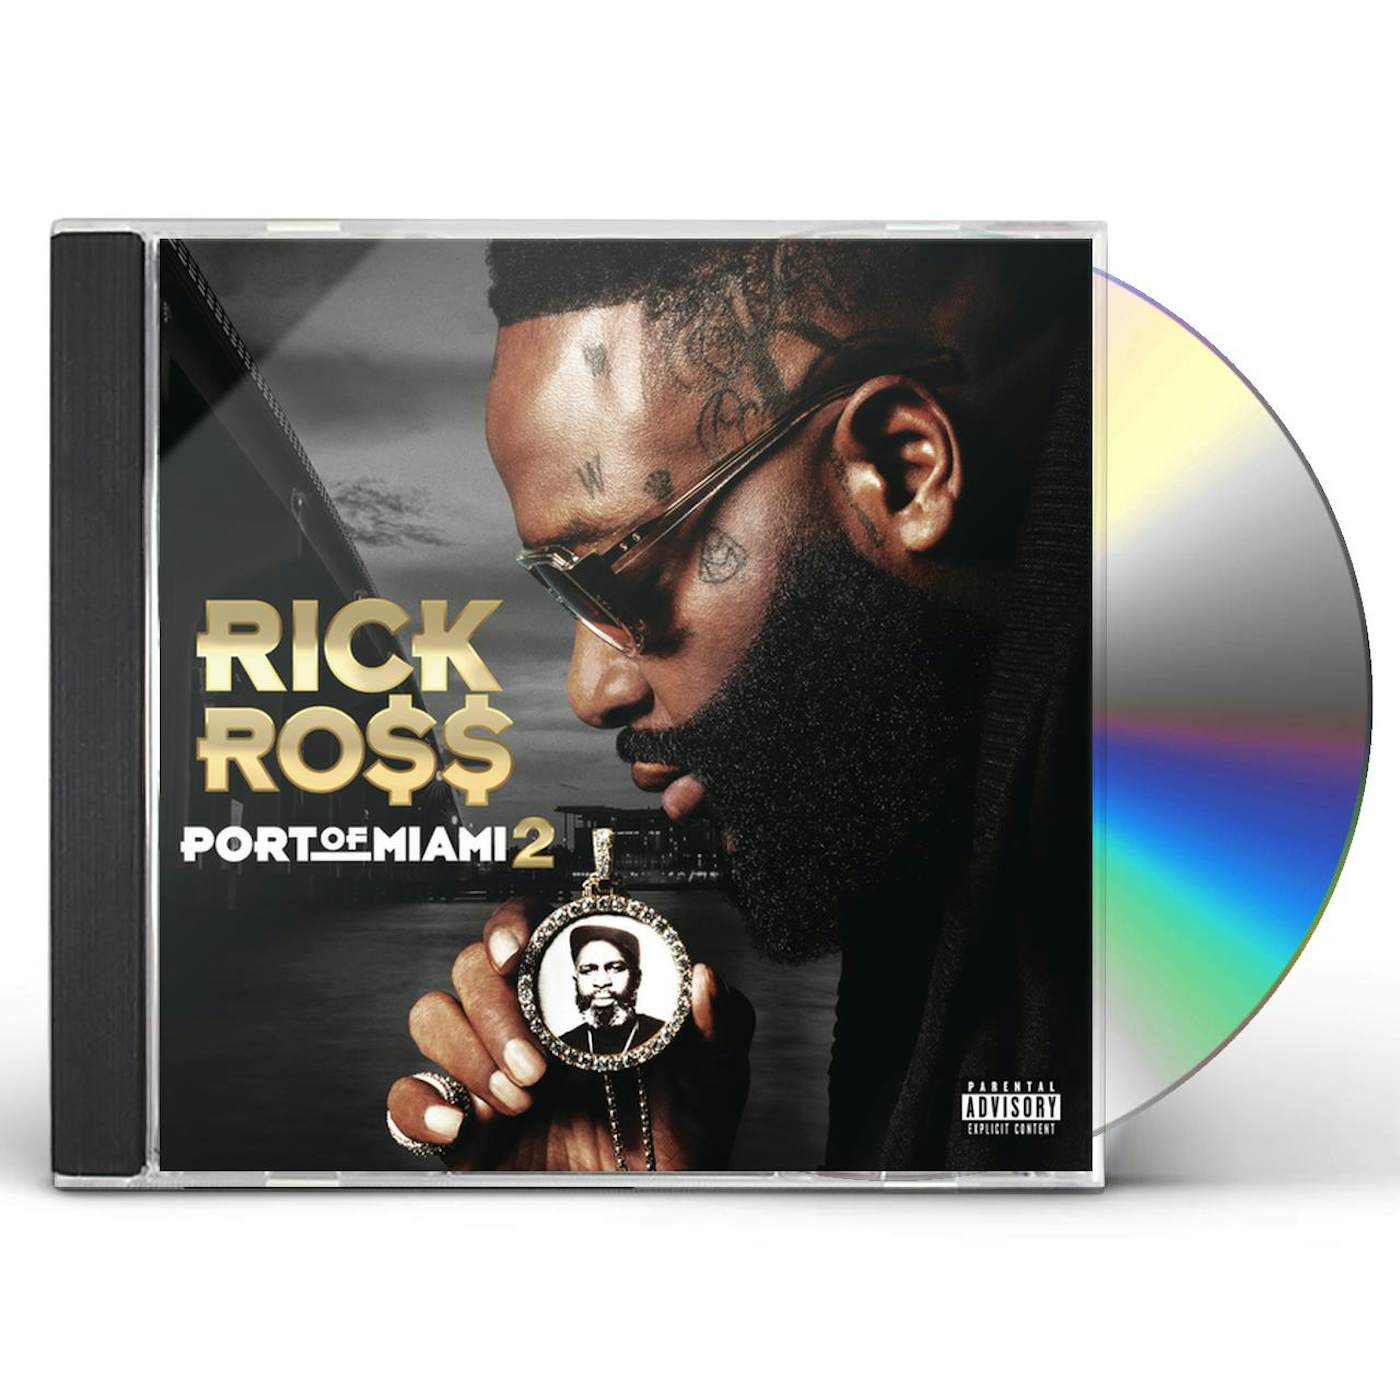 Rick Ross PORT OF MIAMI 2 (X) CD